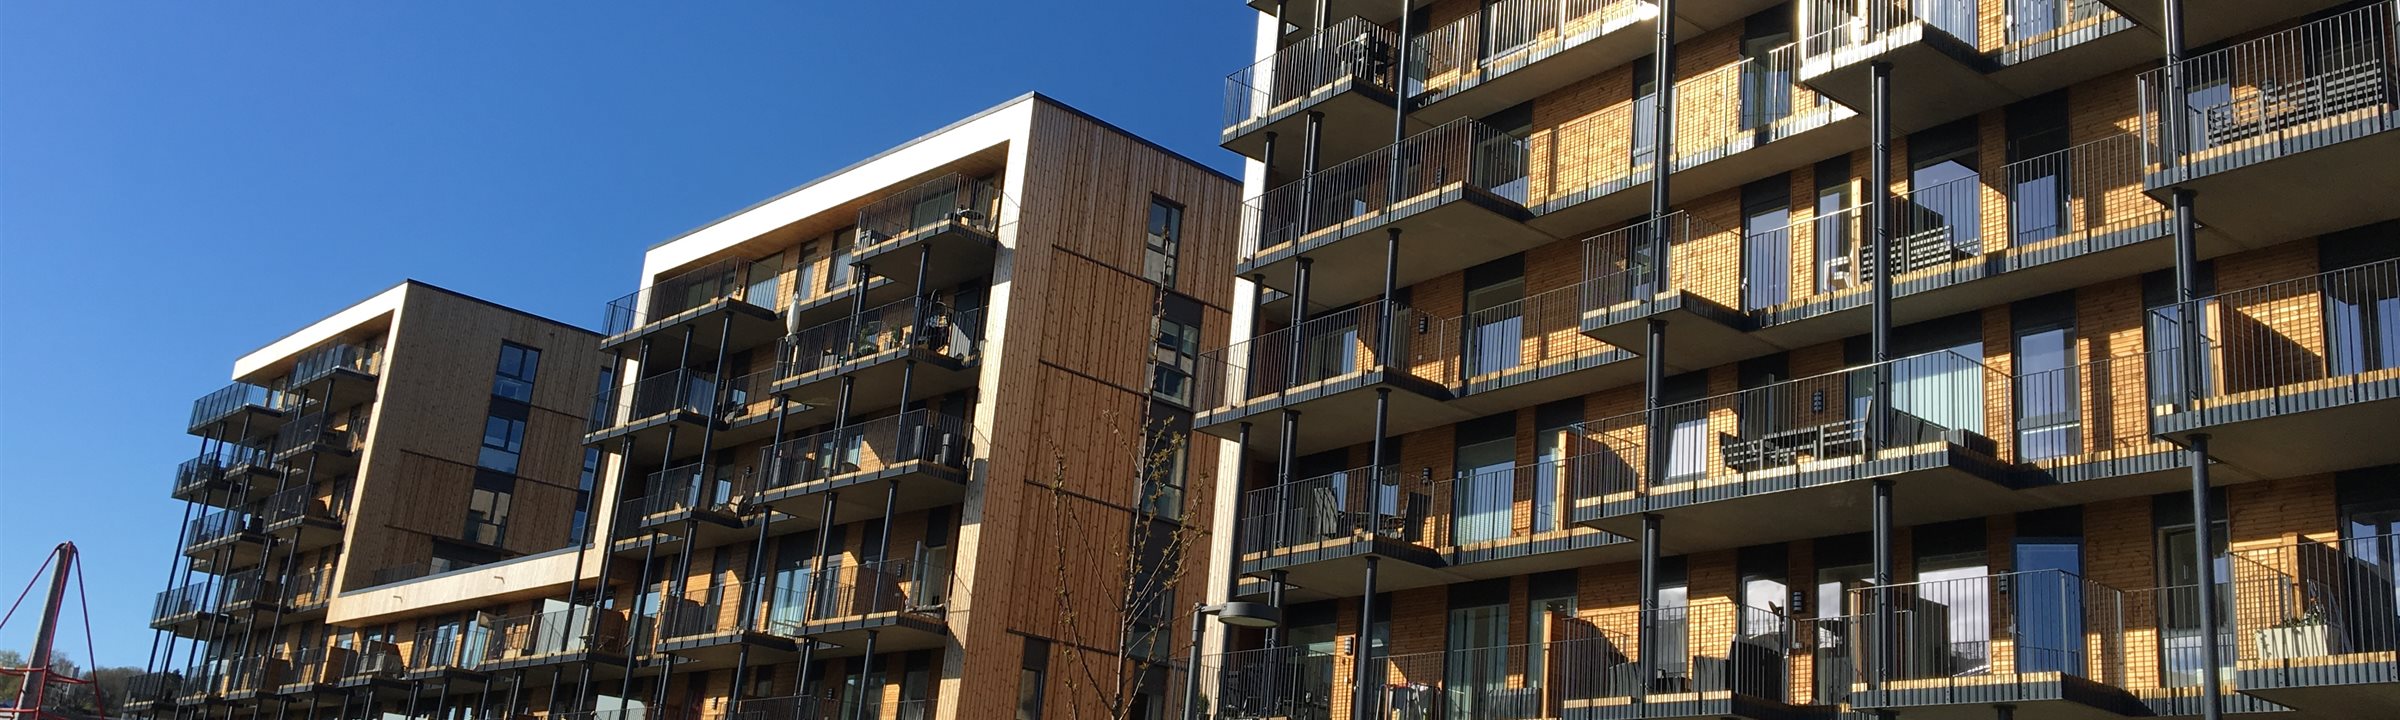 Bilde som viser et ferdig boligbygg på Lilleby i Trondheim